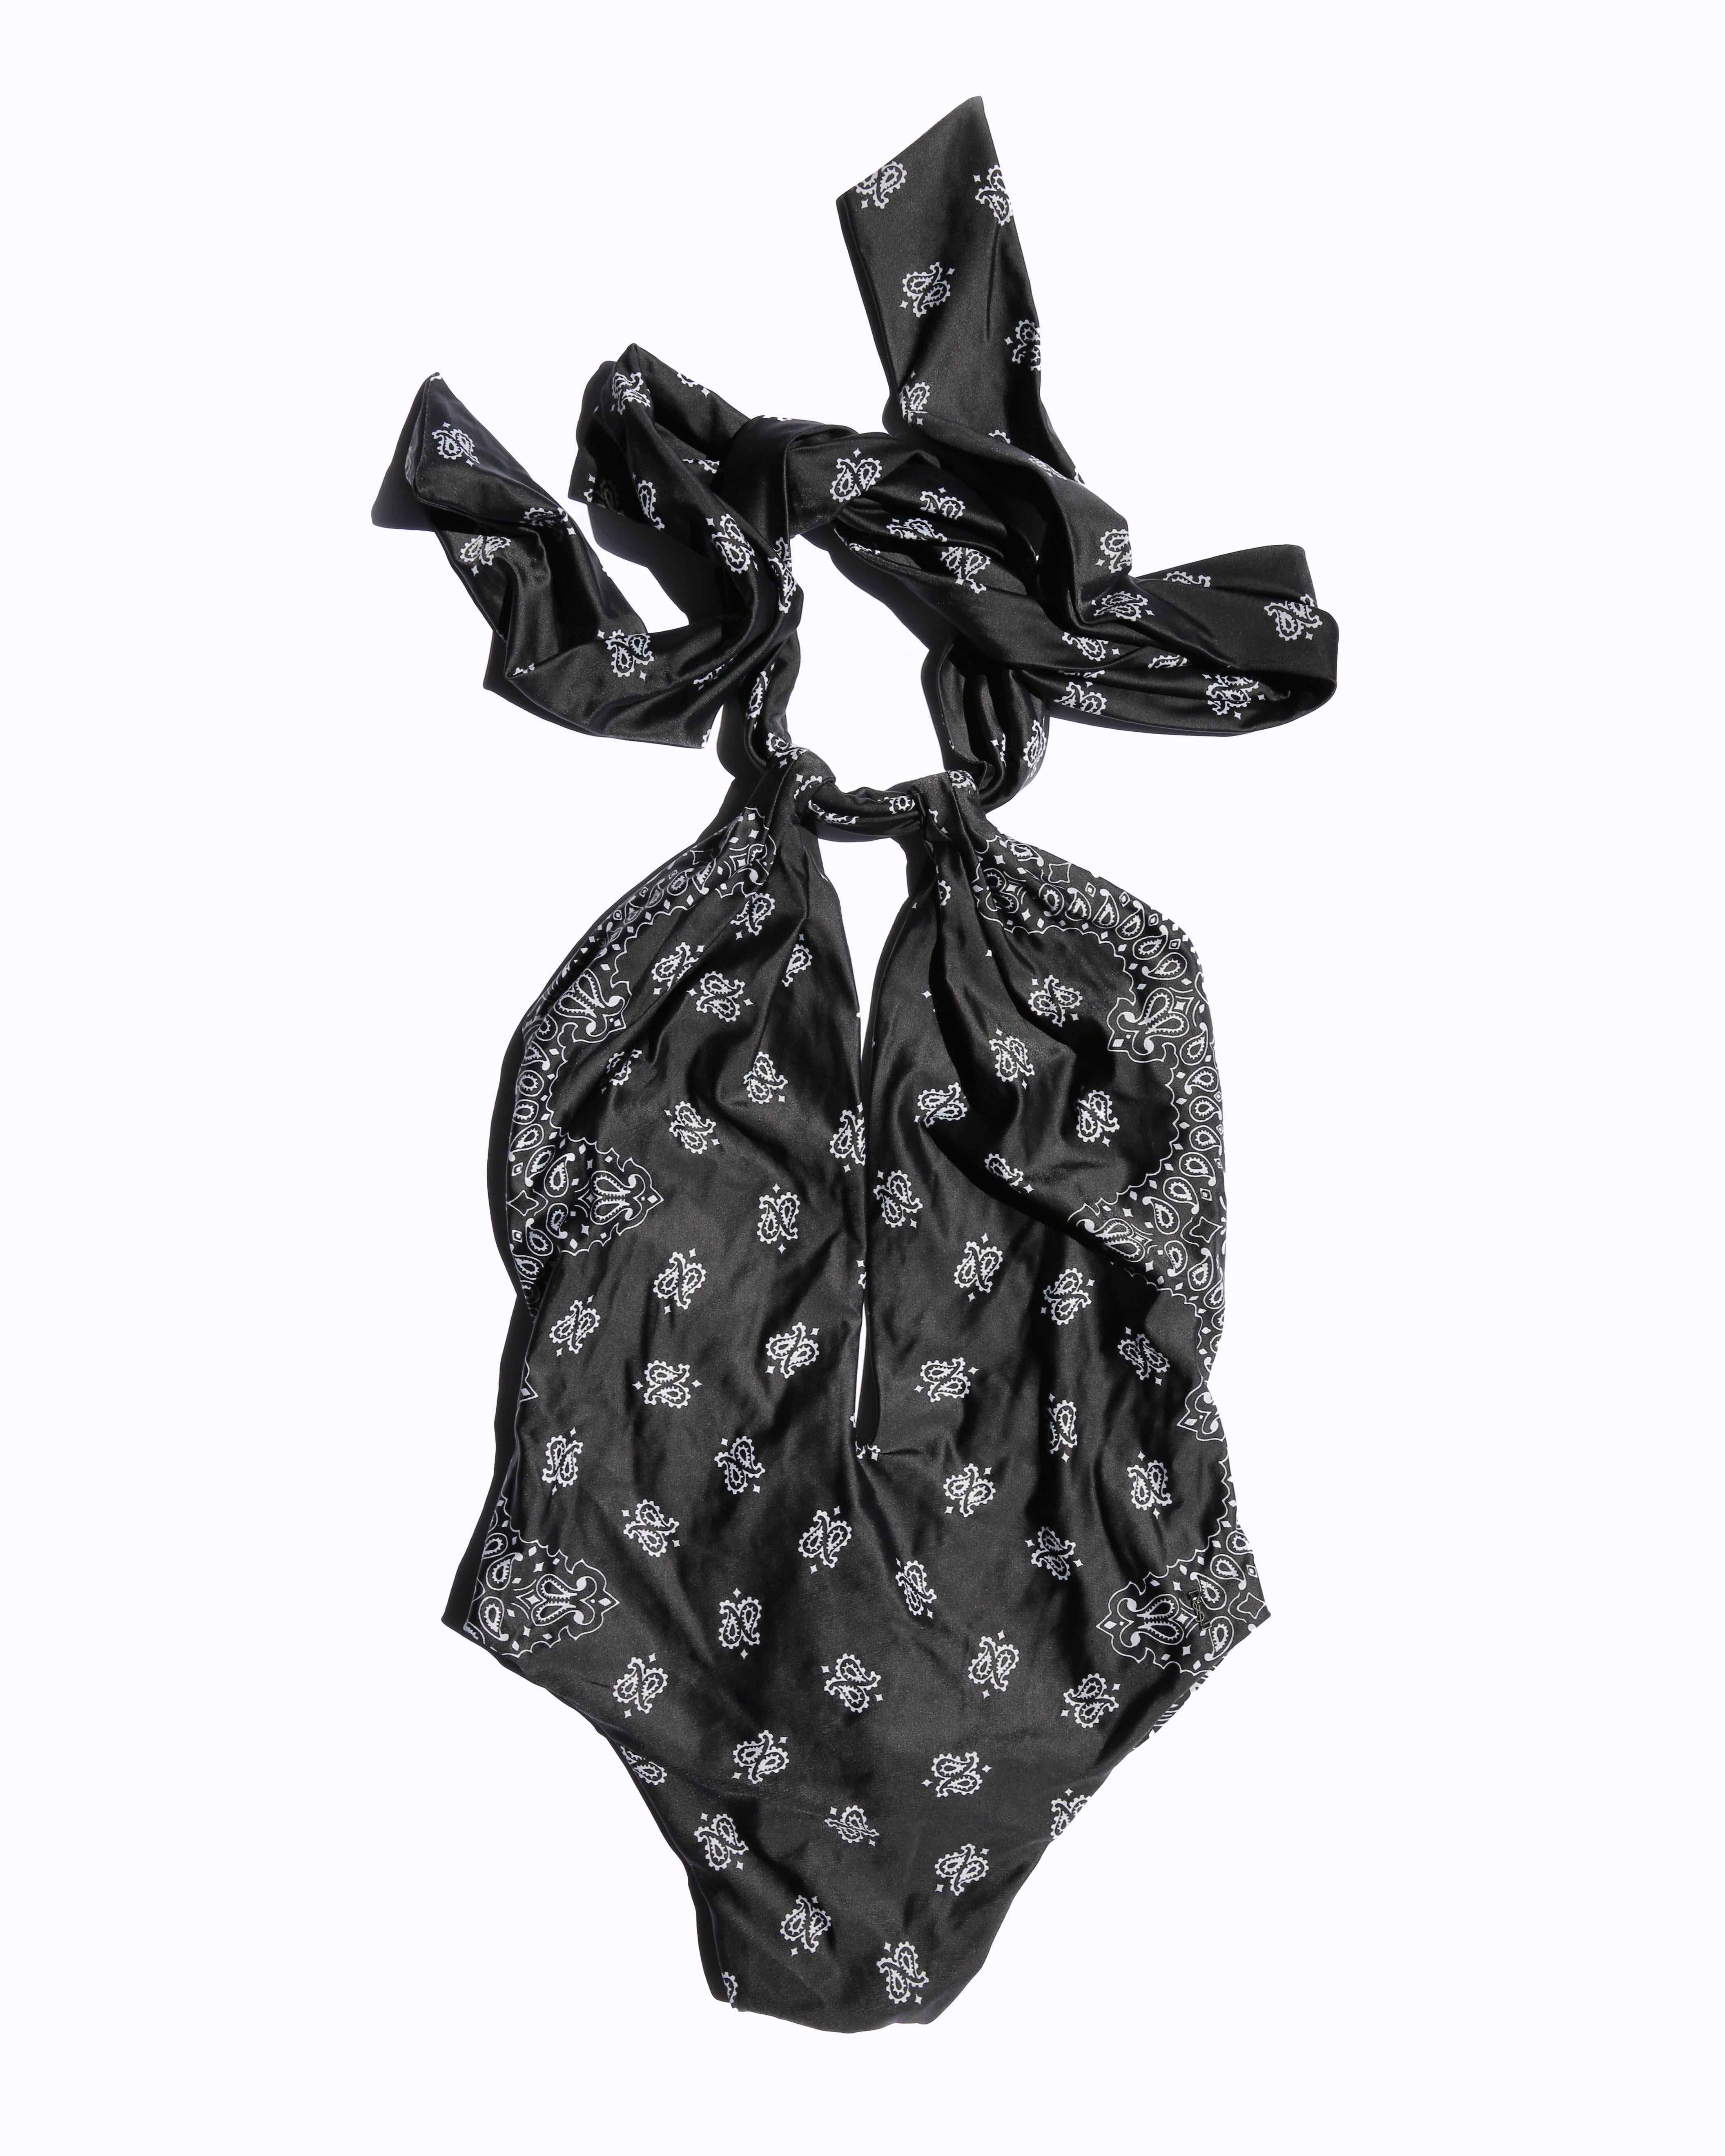 Saint Laurent black & white bandana print plunging one piece swimsuit bikini XS In Excellent Condition For Sale In Paris, FR